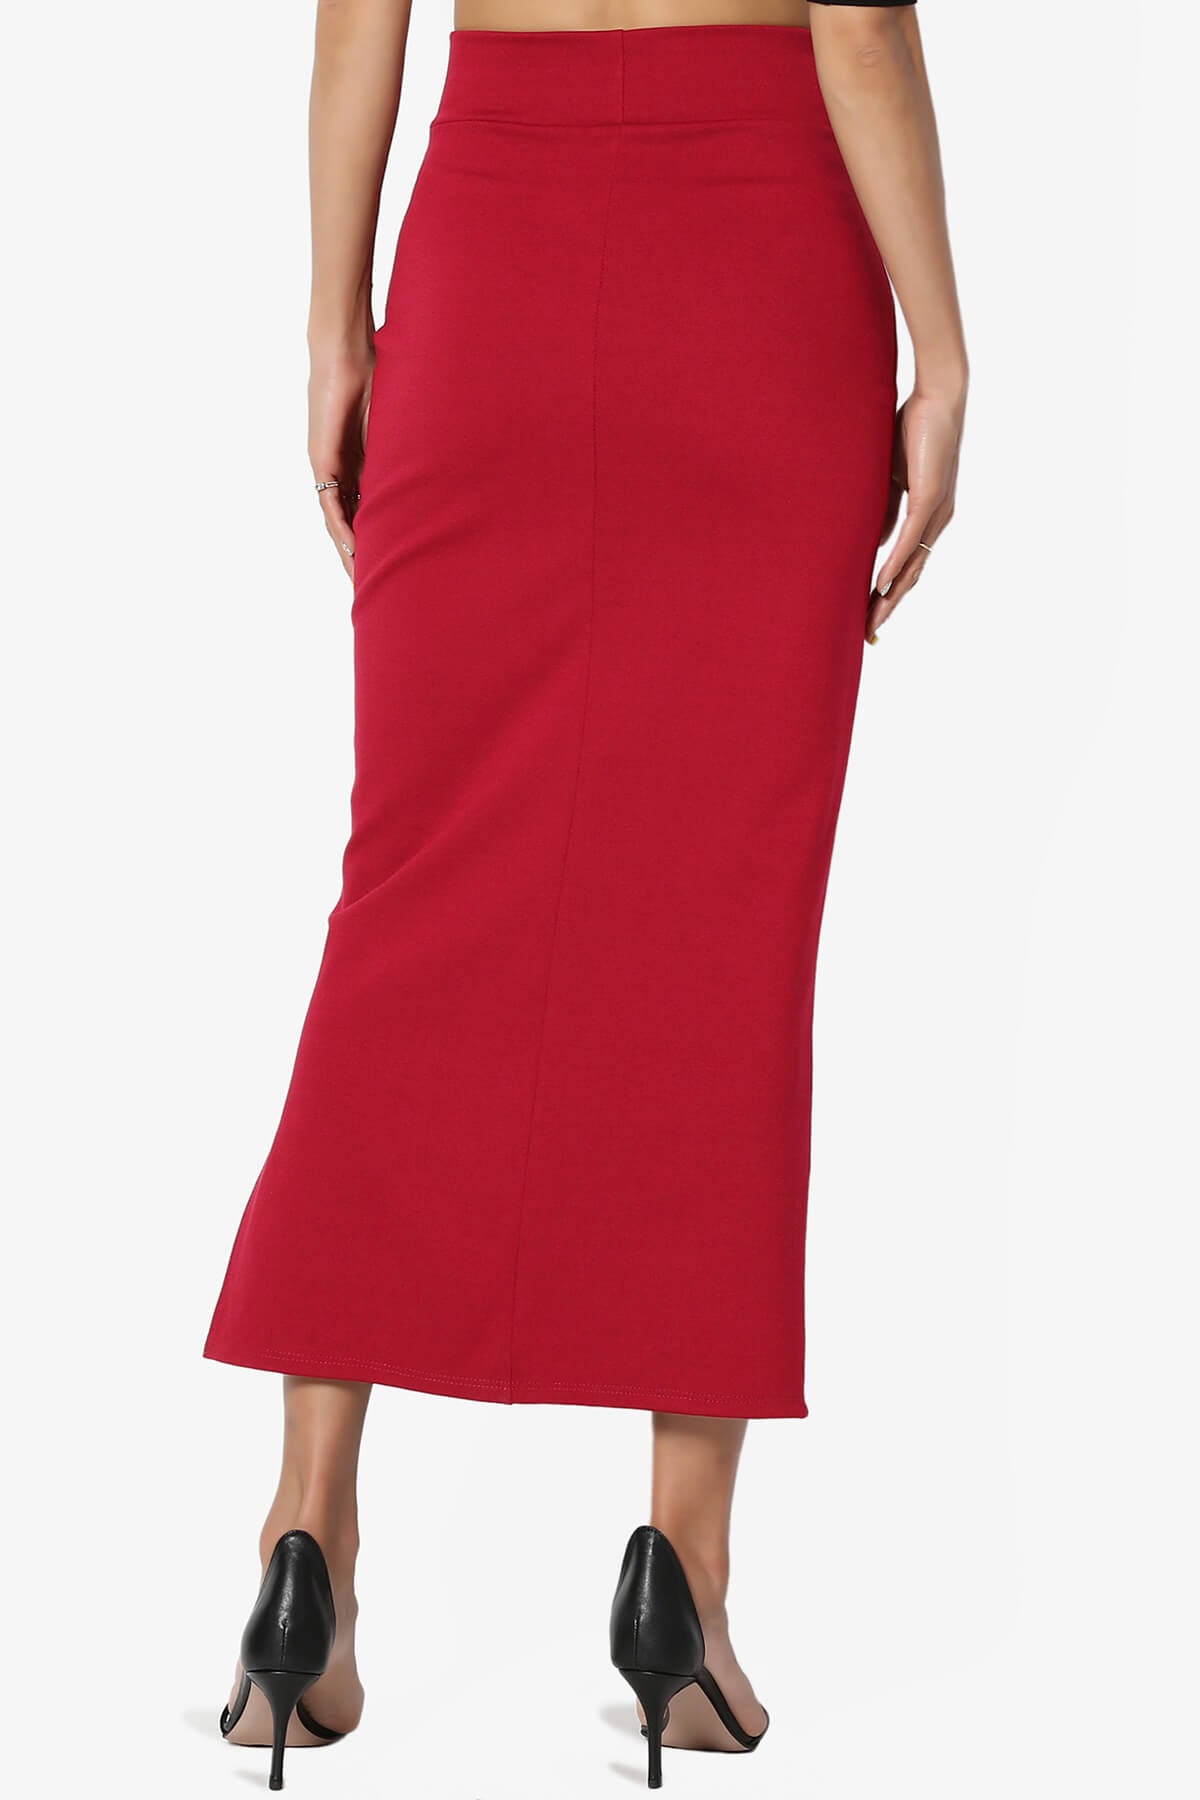 Carleta Mid Calf Pencil Skirt RED_2